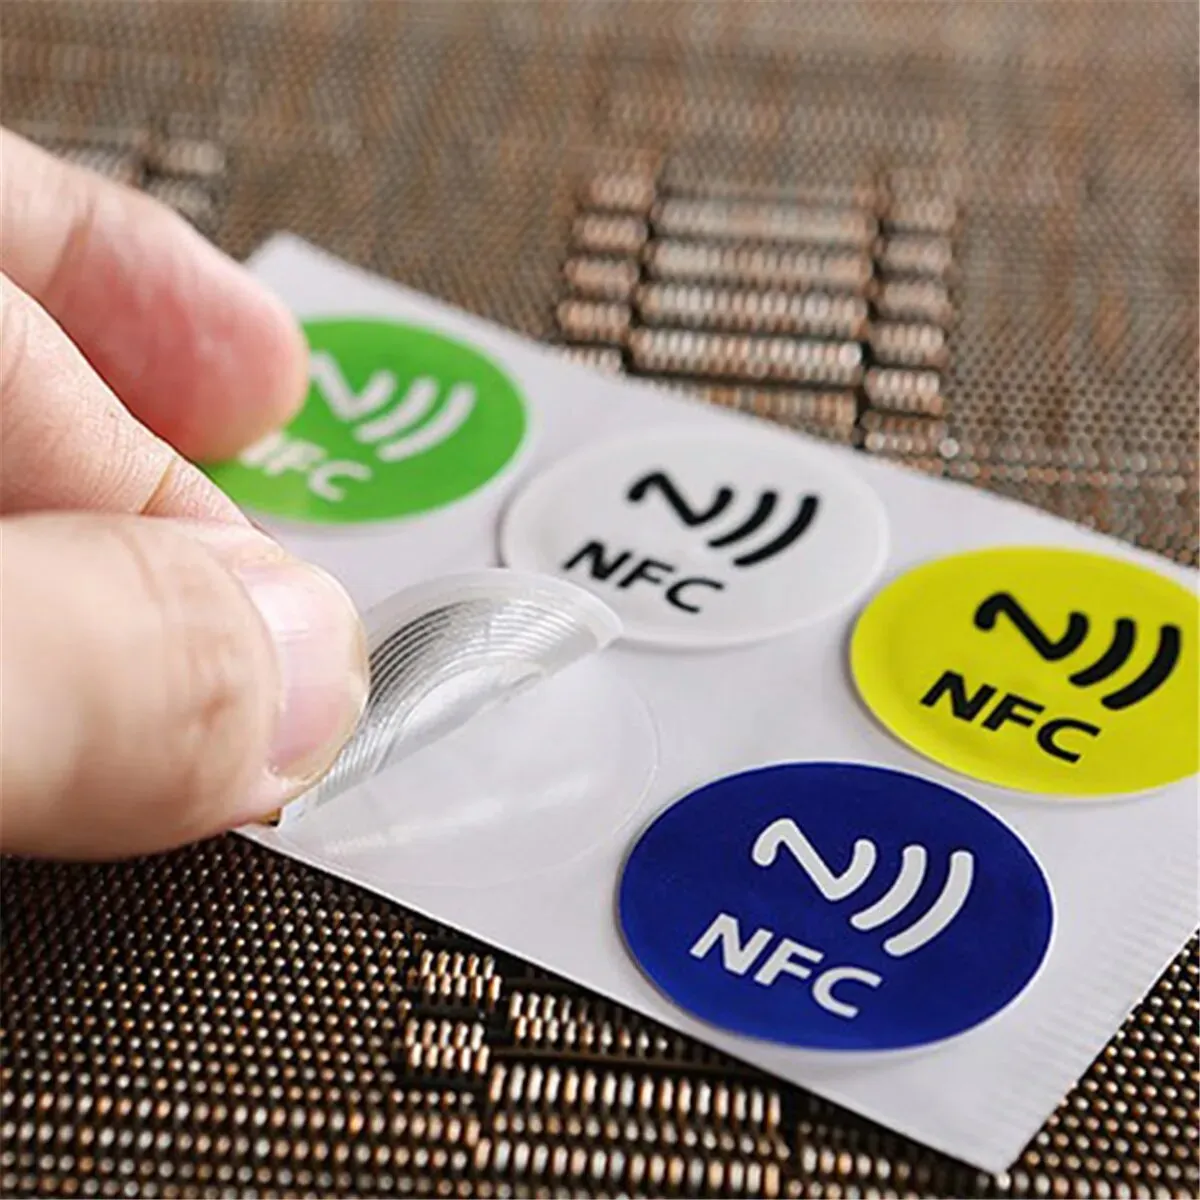 Причина эффективности NFC